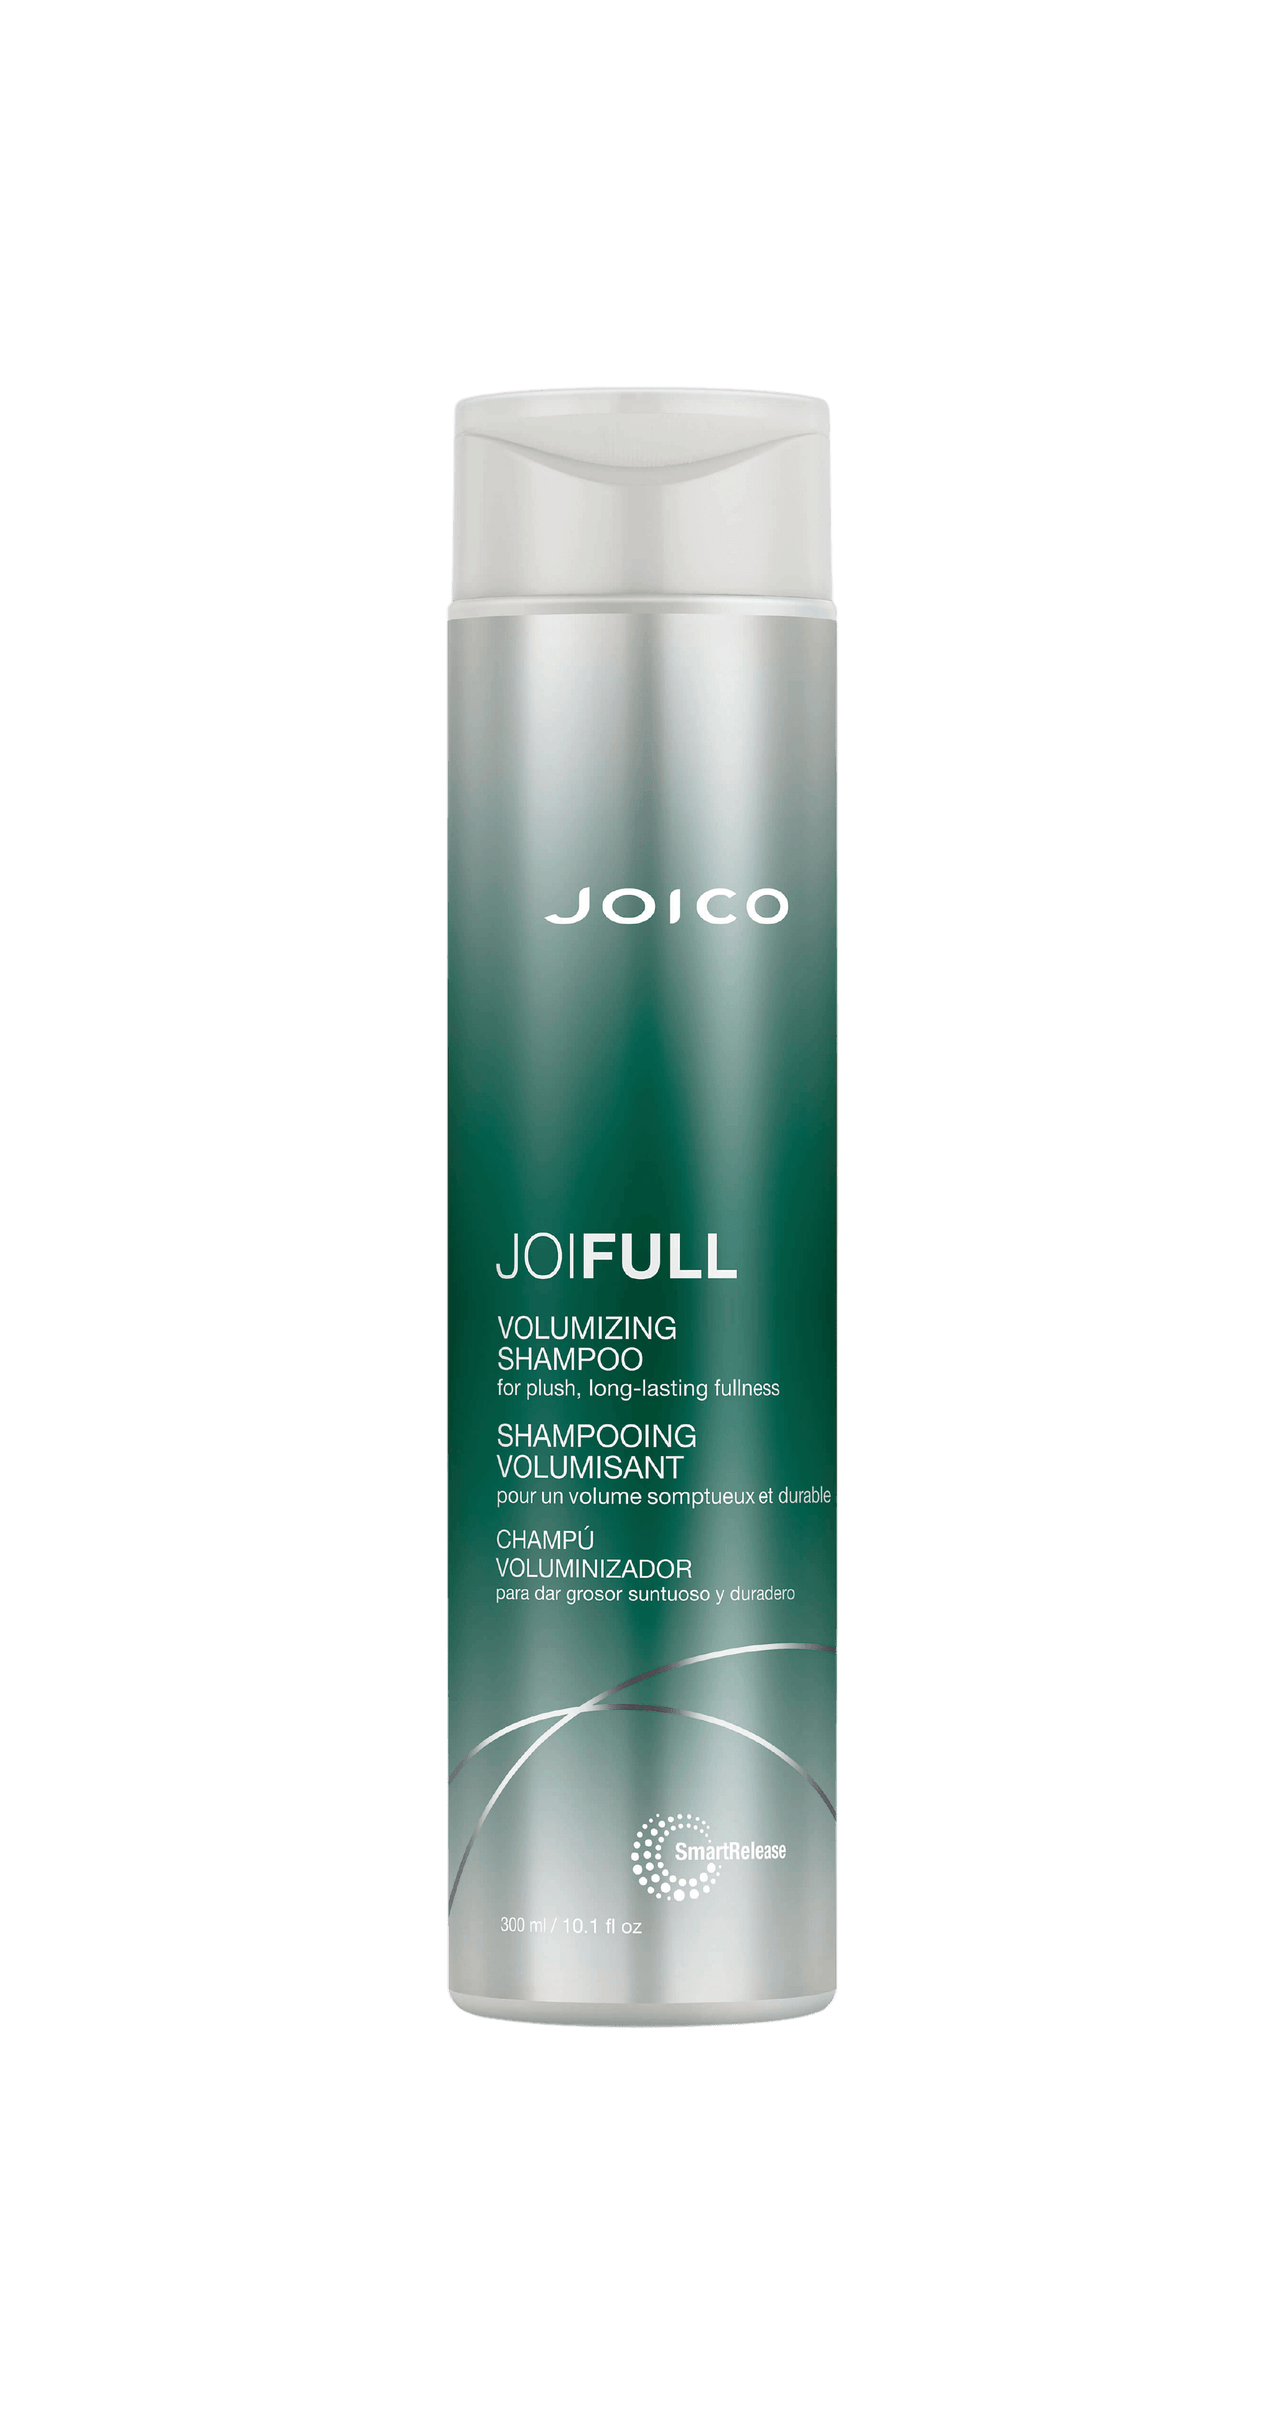 Joico Joifull Volumizing Shampoo 300mL Bottle